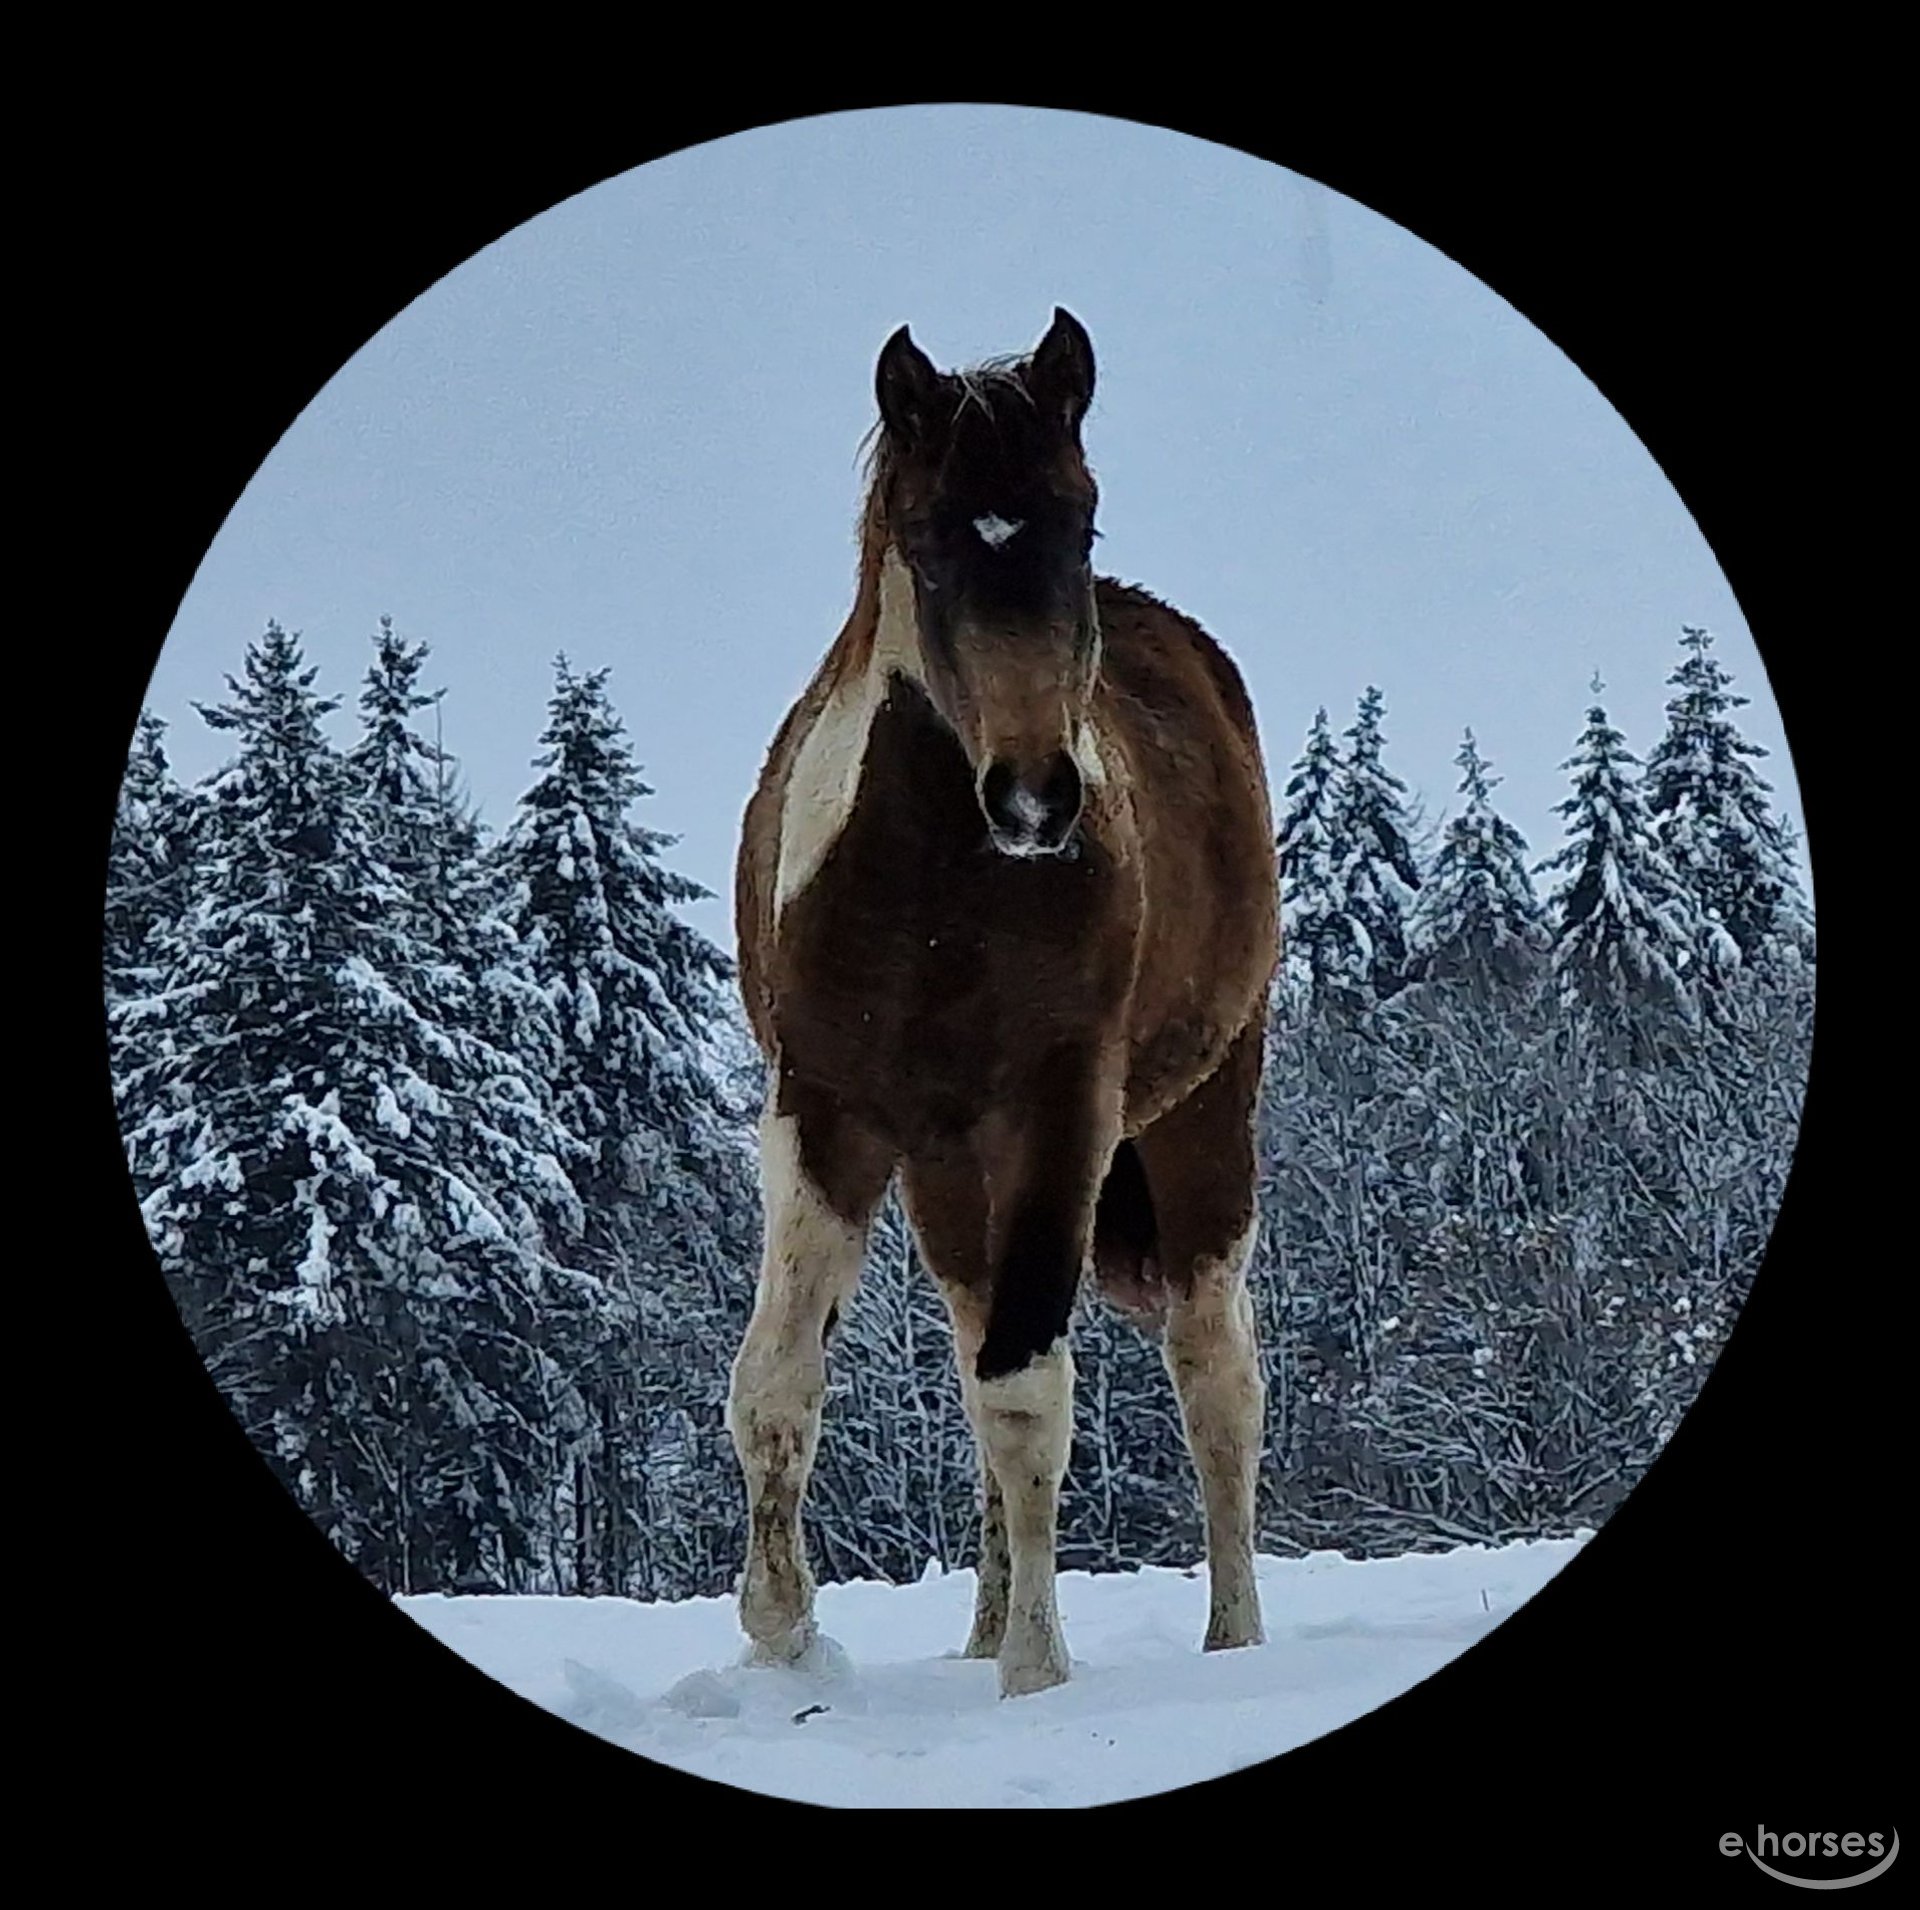 Mane Stallion Mare Mustang Rein, mustang, horse, horse Tack, horse